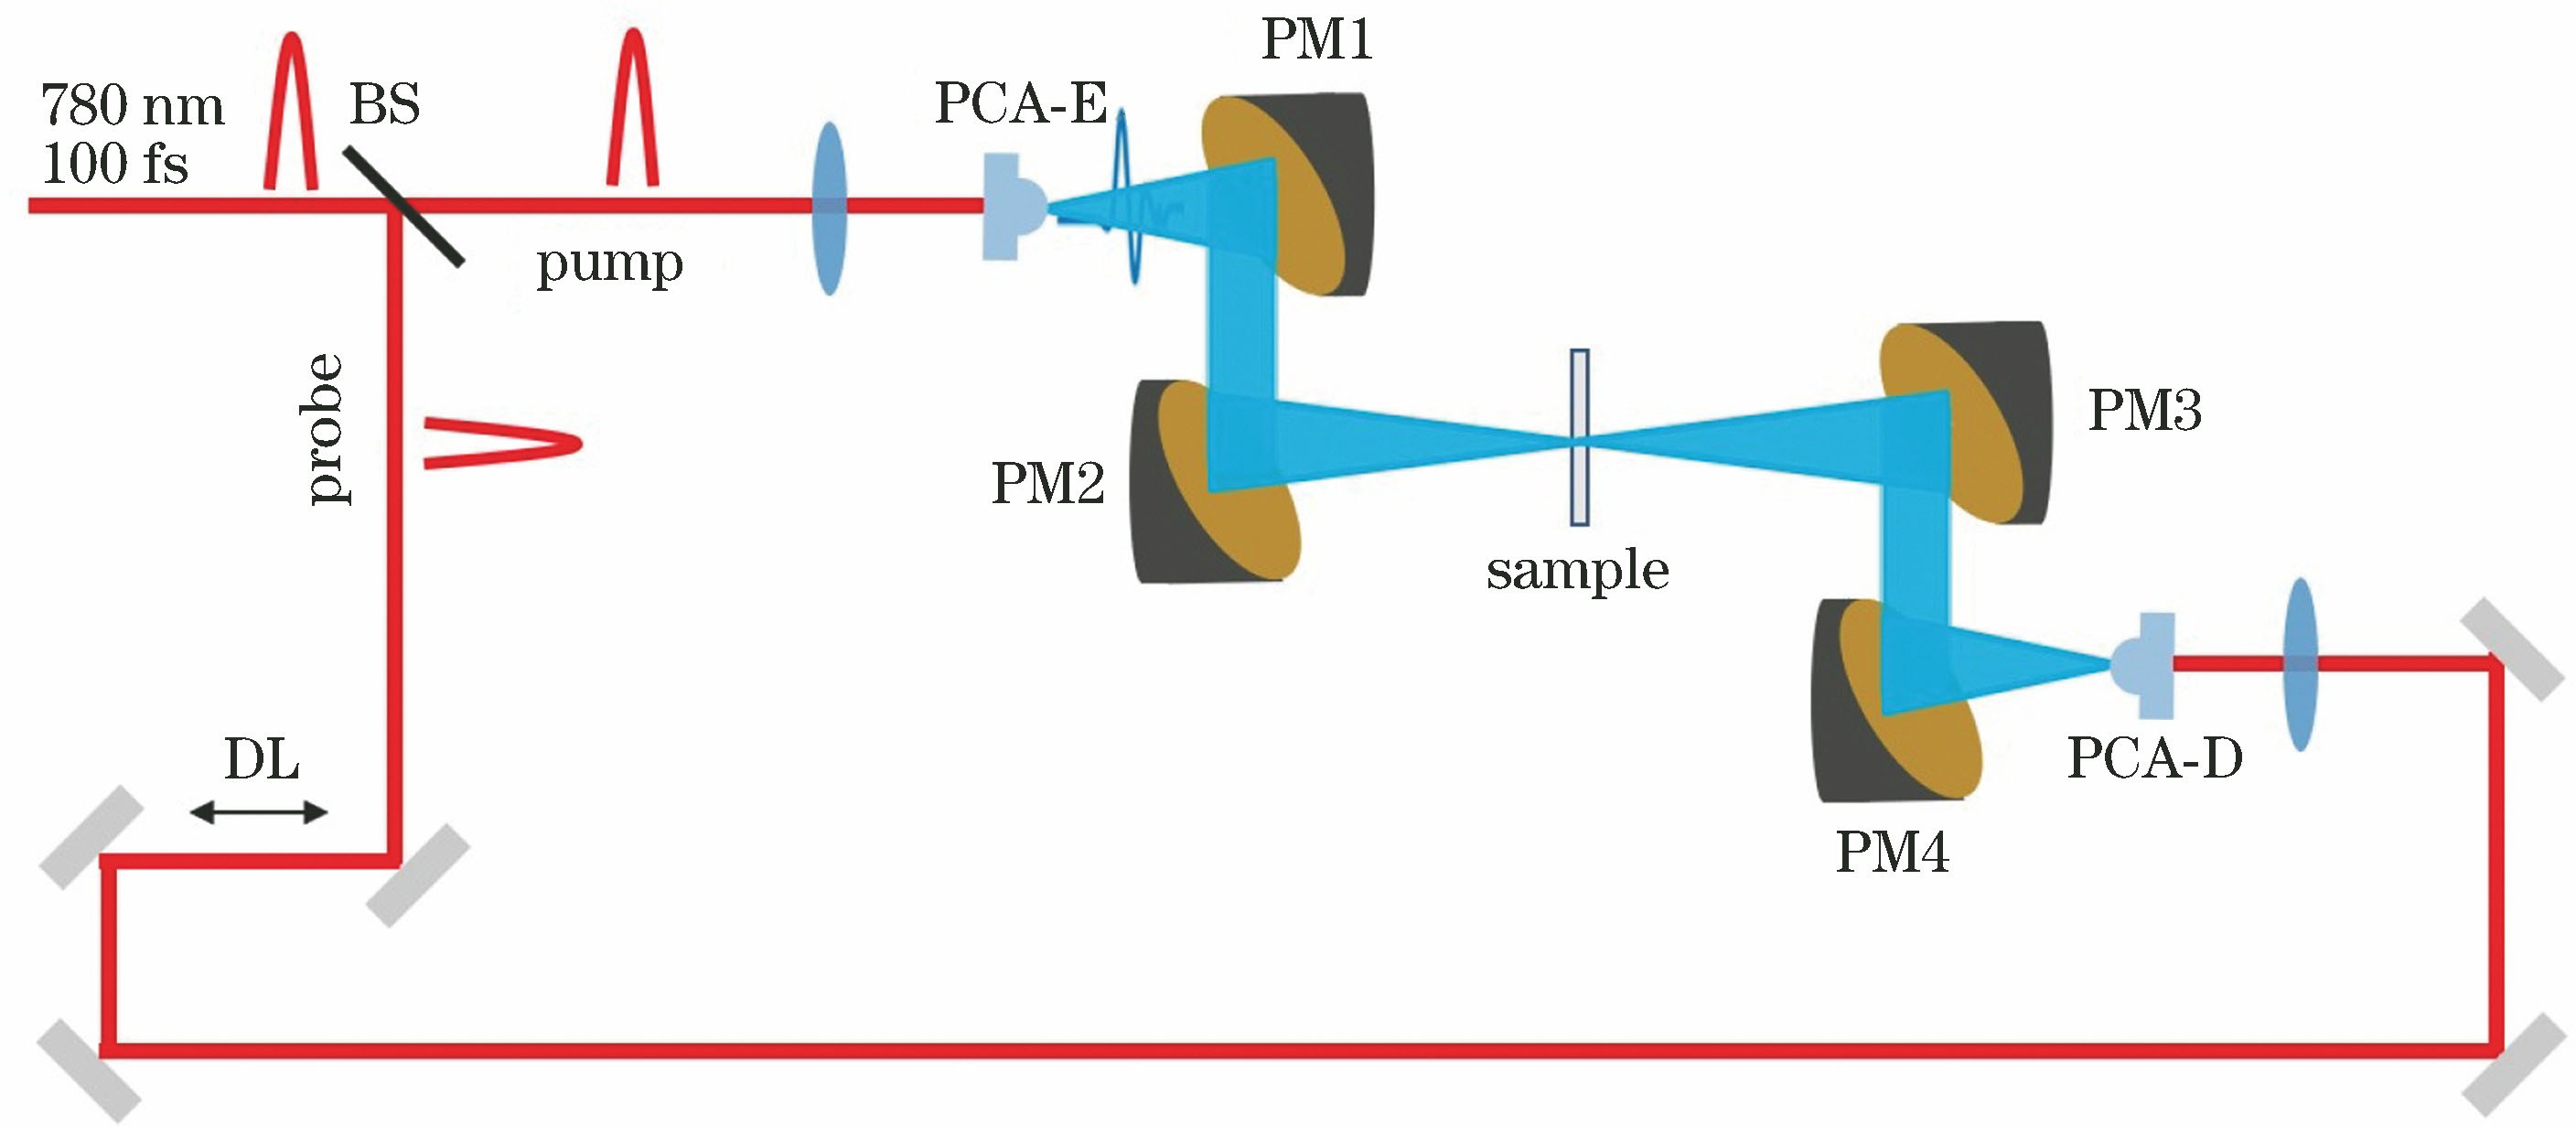 Experimental setup for Terahertz time-domain spectroscopy